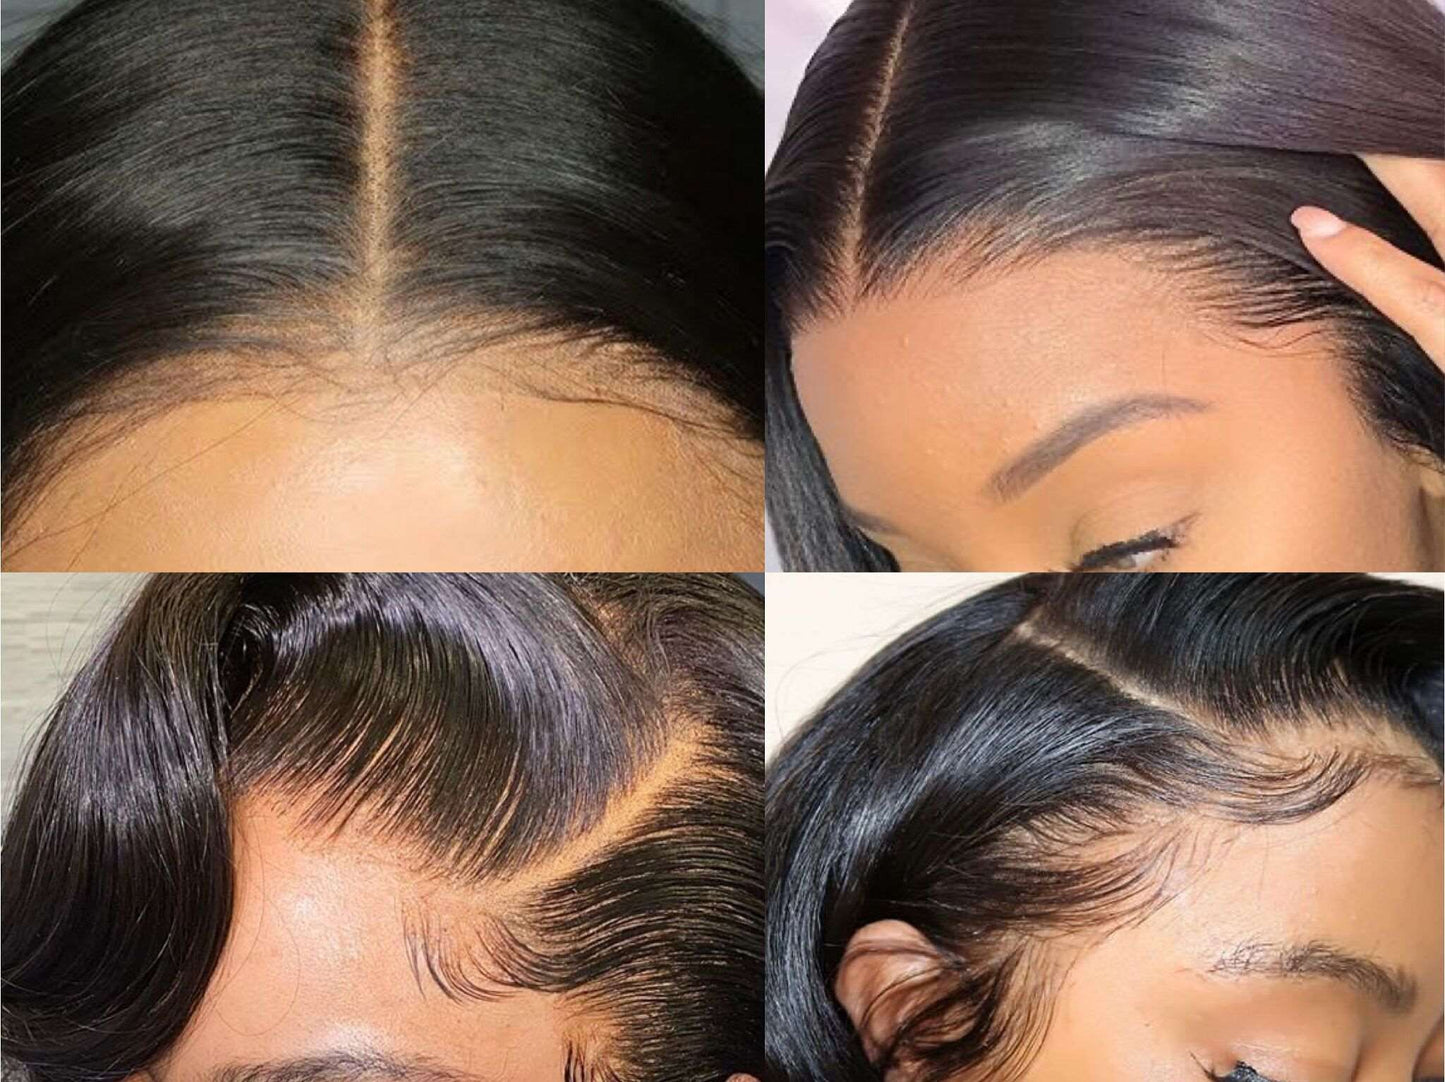 Celebrity Zoe Saldana Wavy Style Indian Remy Hair Glueless Lace Front Wigs